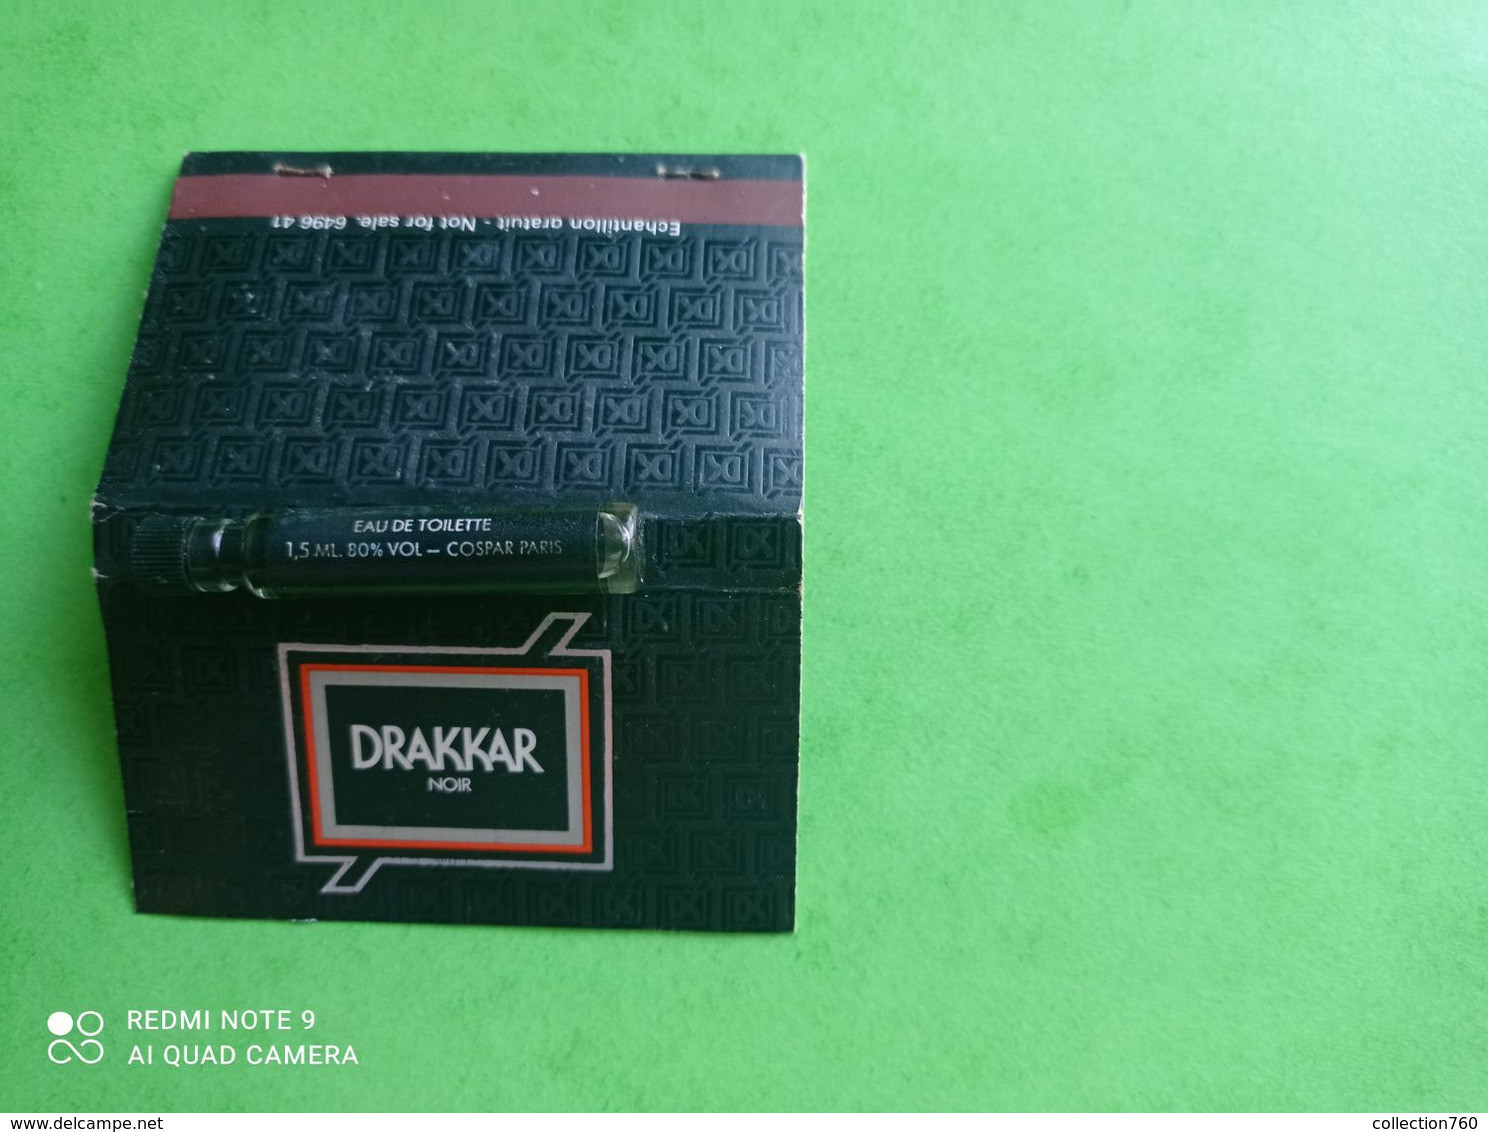 LAROCHE Guy - DRAKKAR - Echantillon Drakkar + 40 Allumettes (collector) - Perfume Samples (testers)